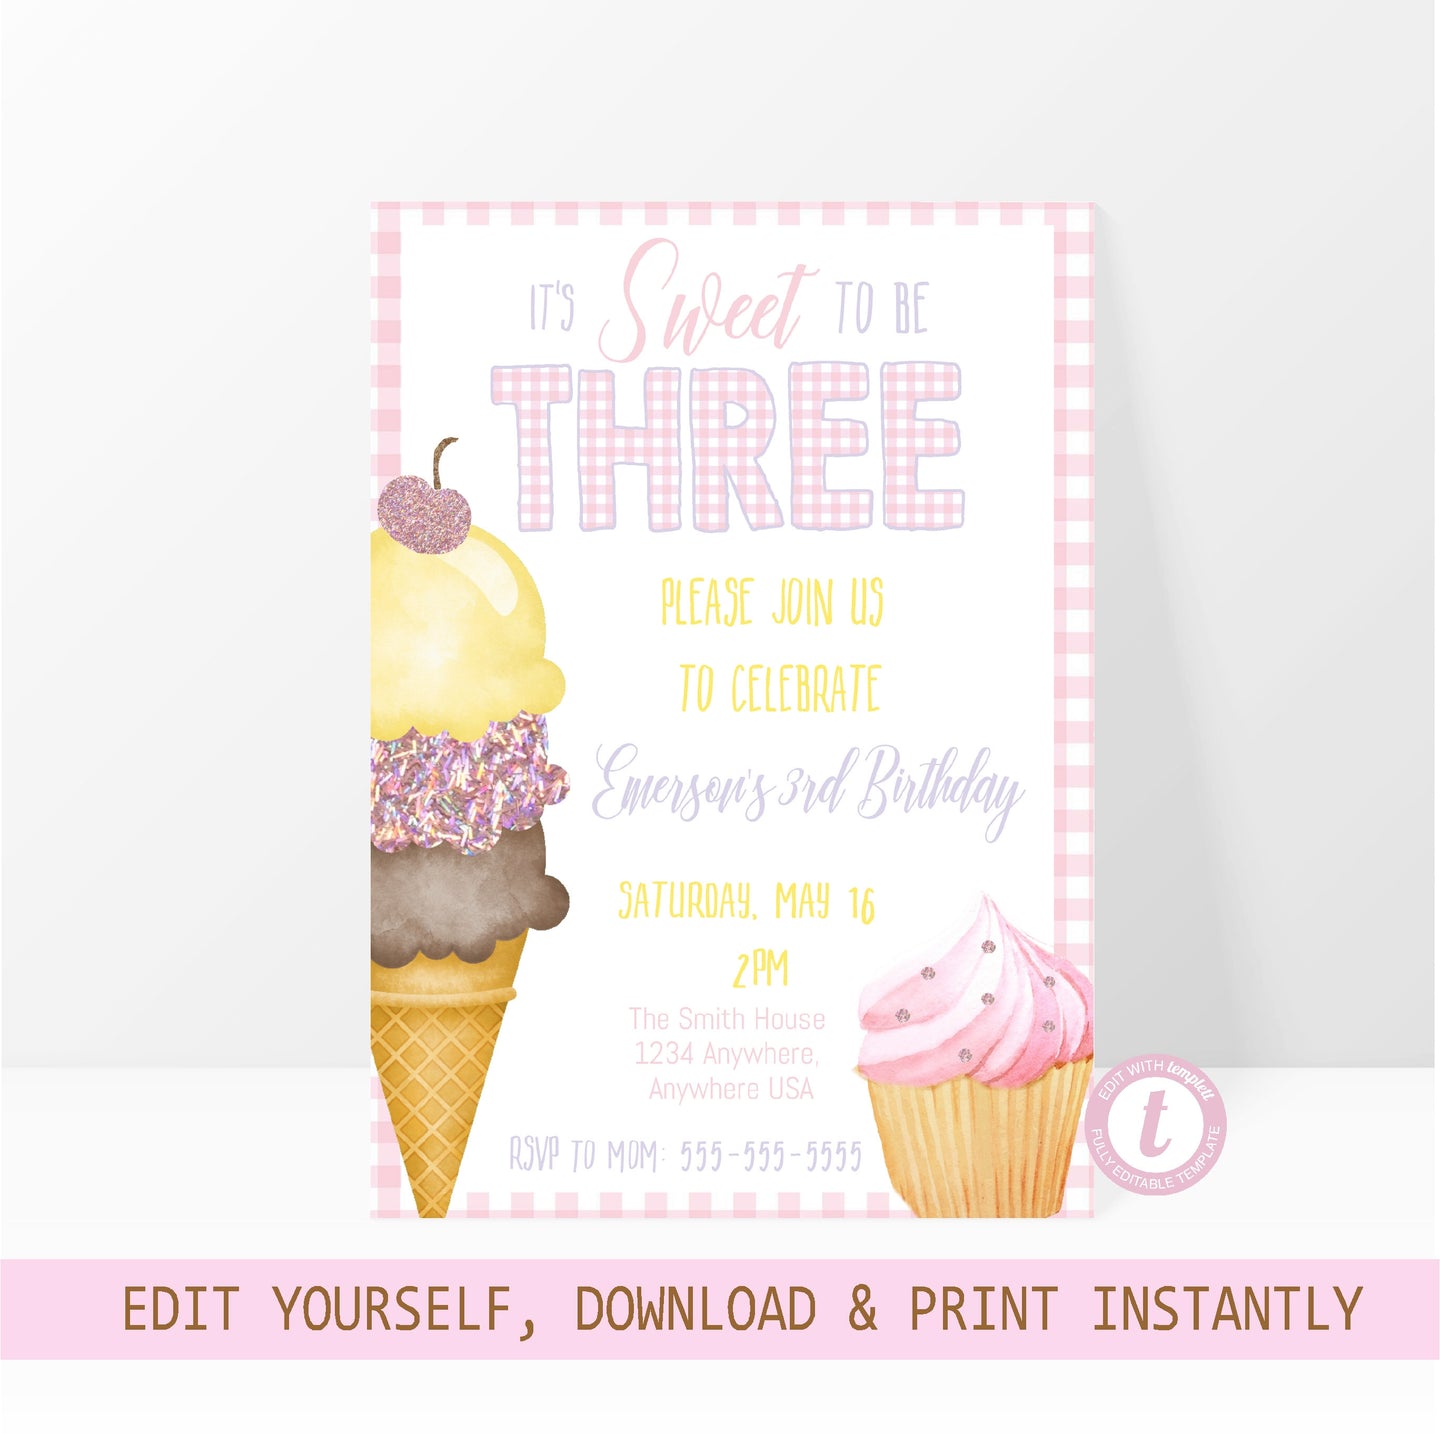 Ice Cream Birthday Invitation | Glitter Sweet to be three Invite | Edit Yourself | Instant Download | cupcake | Sweet celebration |Printable